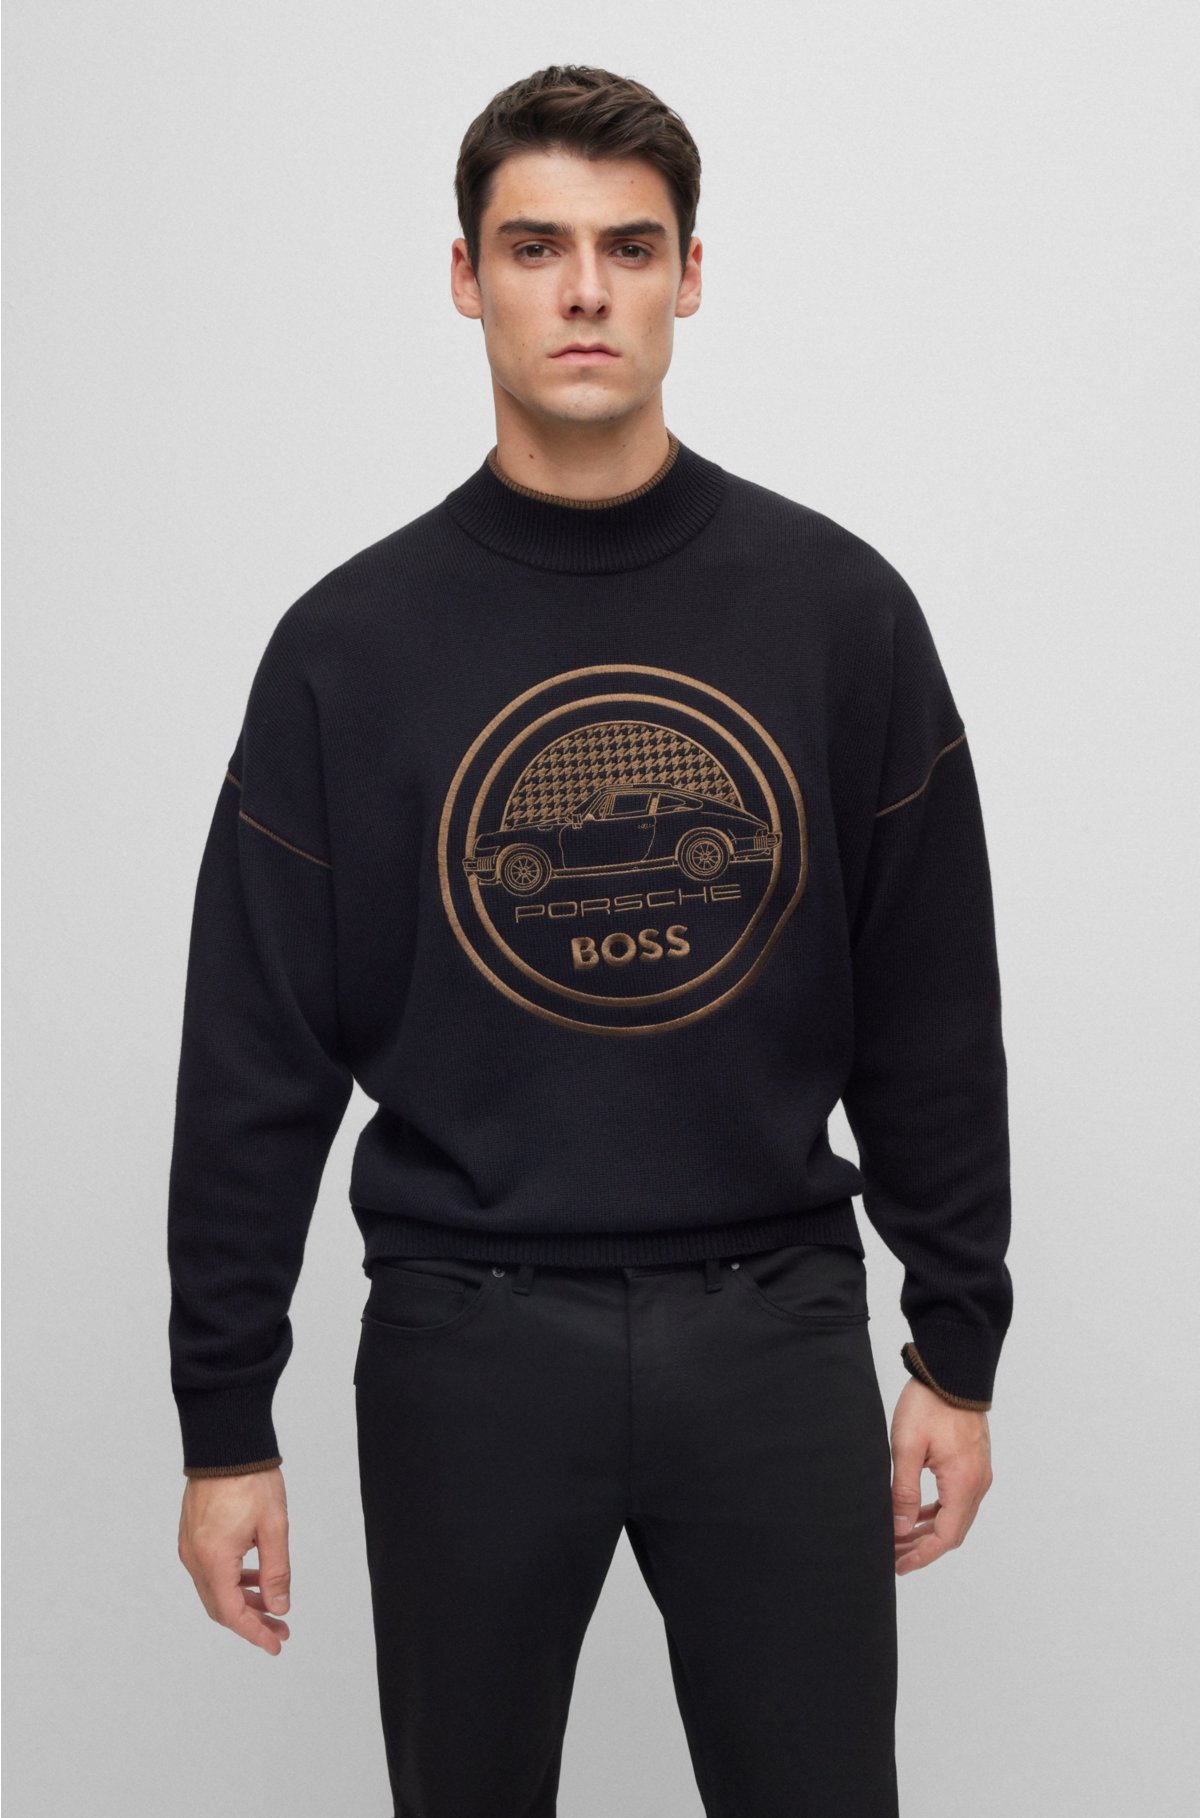 BOSS - Porsche x BOSS capsule-logo sweatshirt in cotton and wool